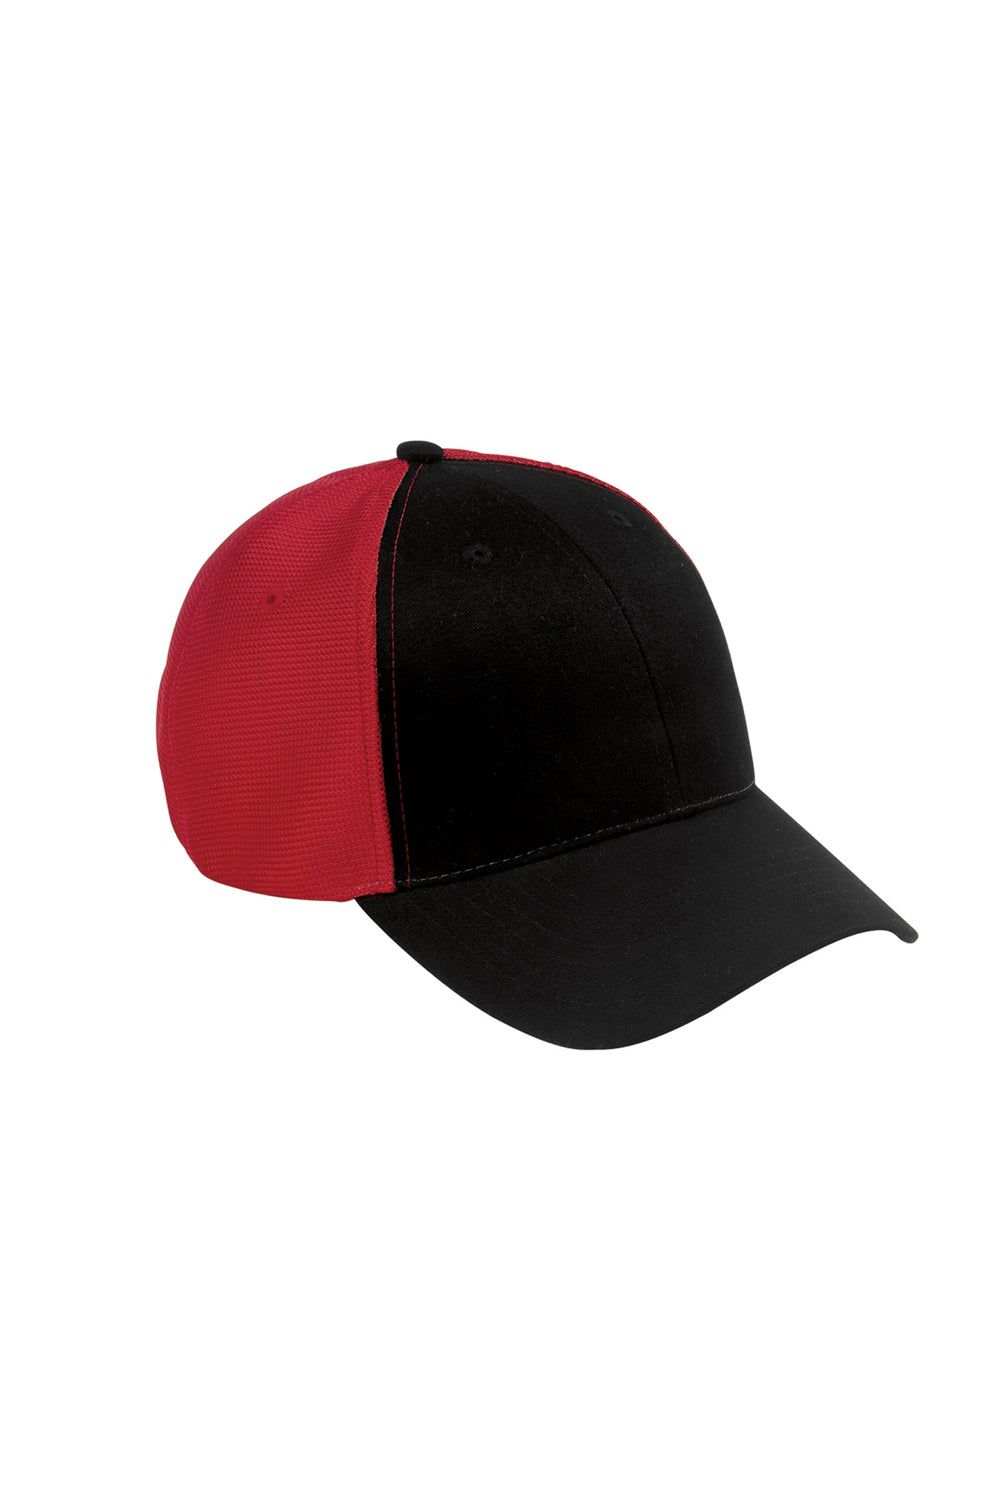 Big Accessories OSTM Mens Old School Adjustable Hat Black/Red Front